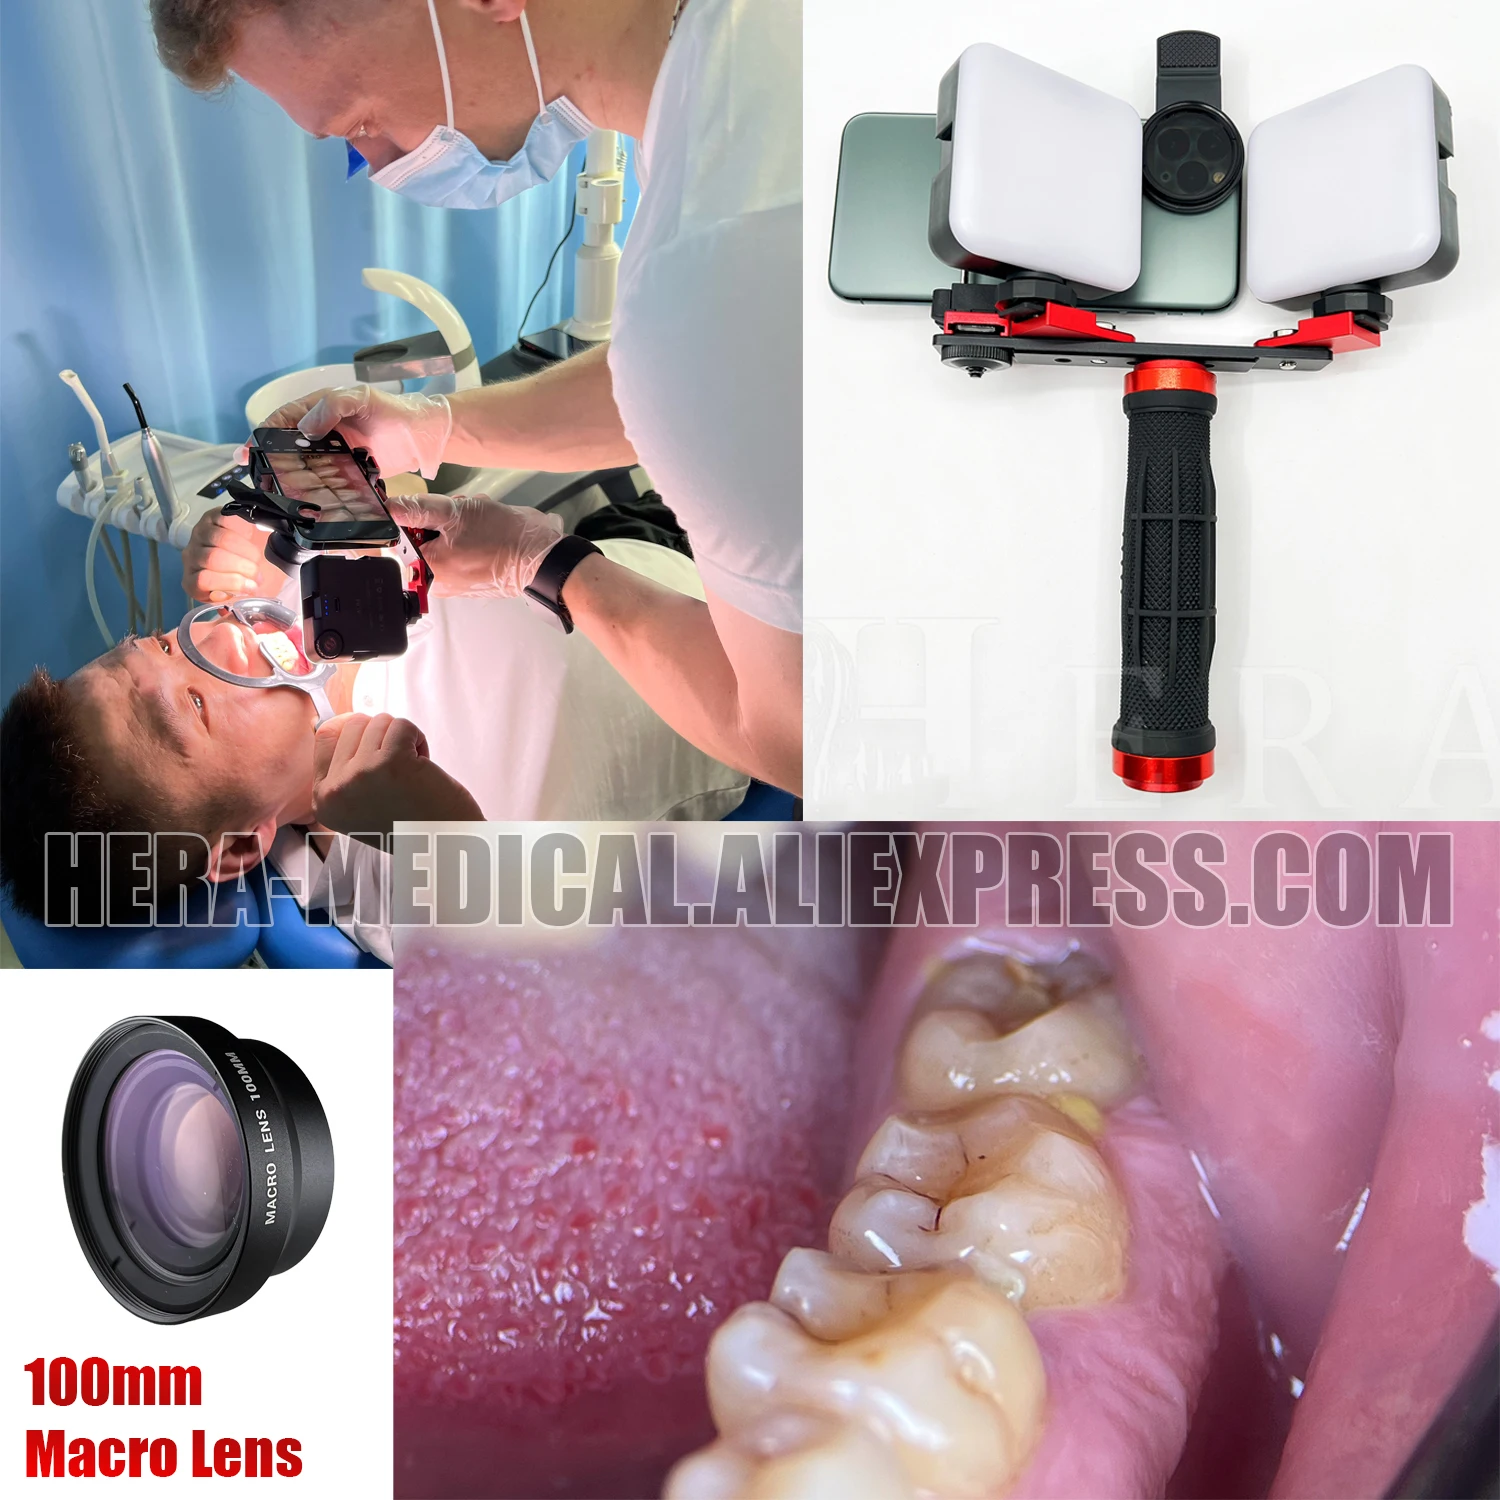 MK 16 Bluetooth Dental Flash Light Photography Equipment Dentistry LED Oral Filling Light for Dentist Lighting Dental Fill light images - 6